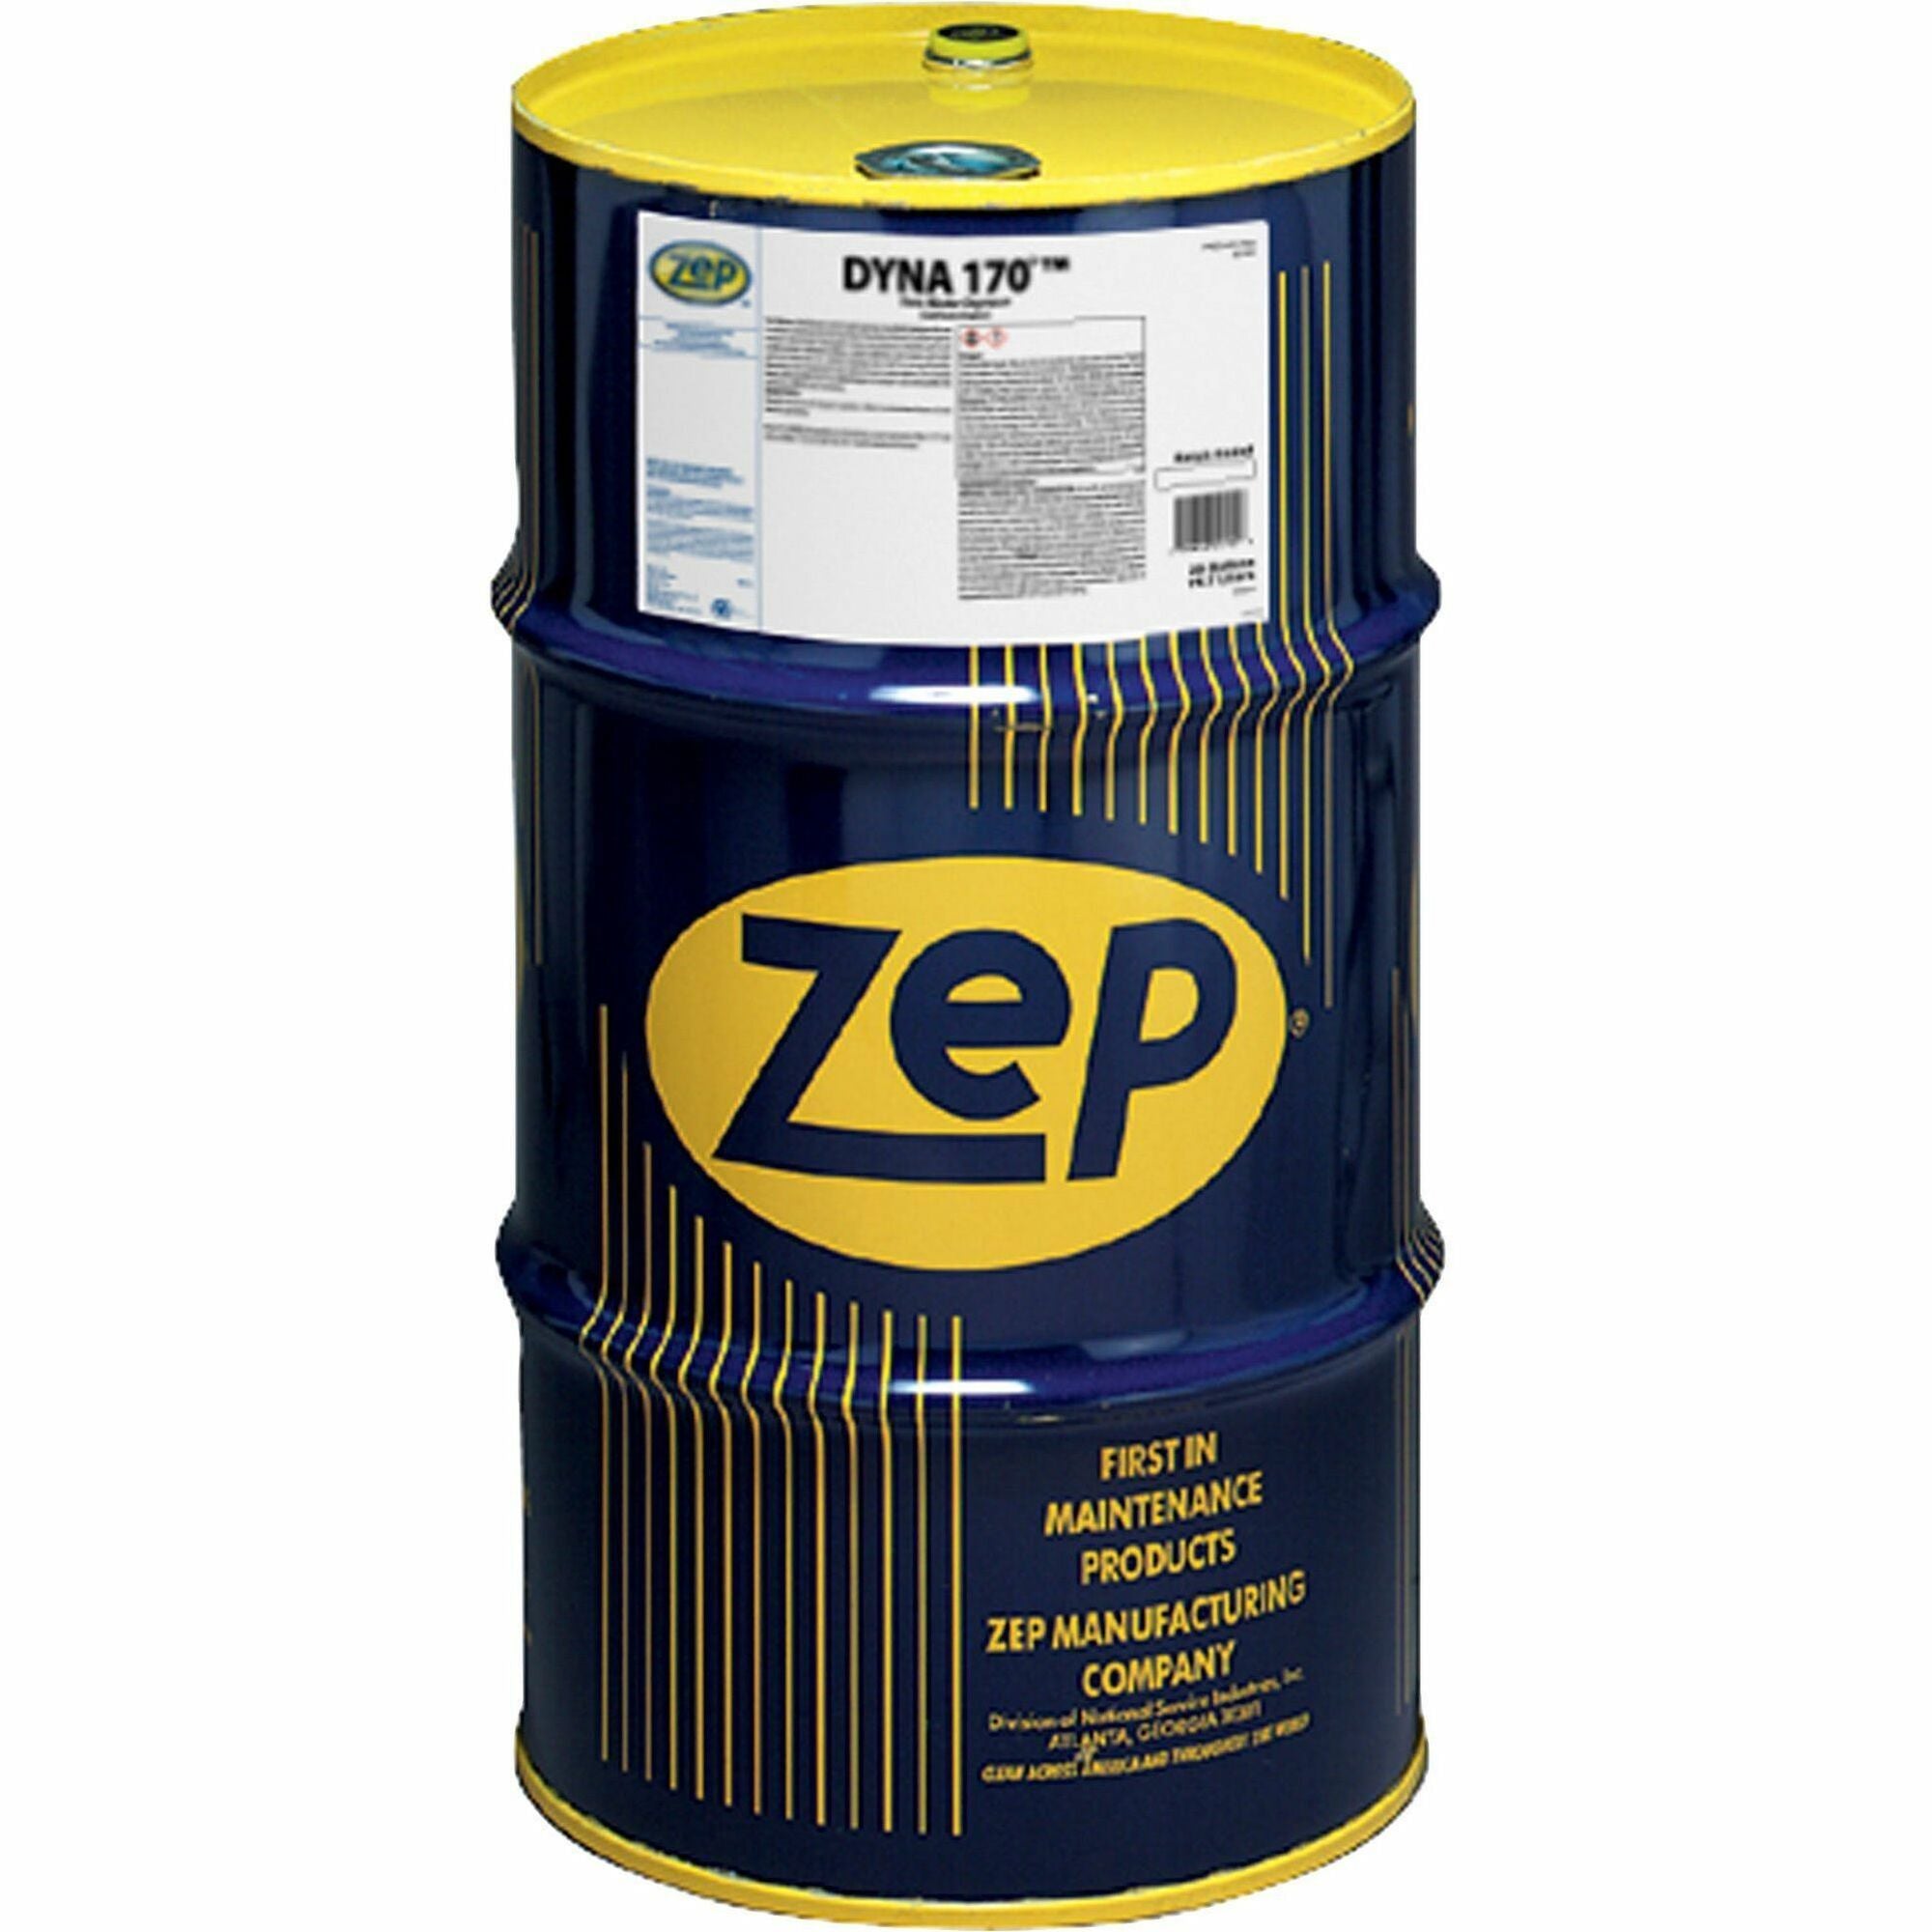 Zep Commercial Dyna 170 Solvent - 2560 fl oz (80 quart) - 1 Each - Low VOC, Low Odor, Rust Resistant, Corrosion Resistant - Colorless